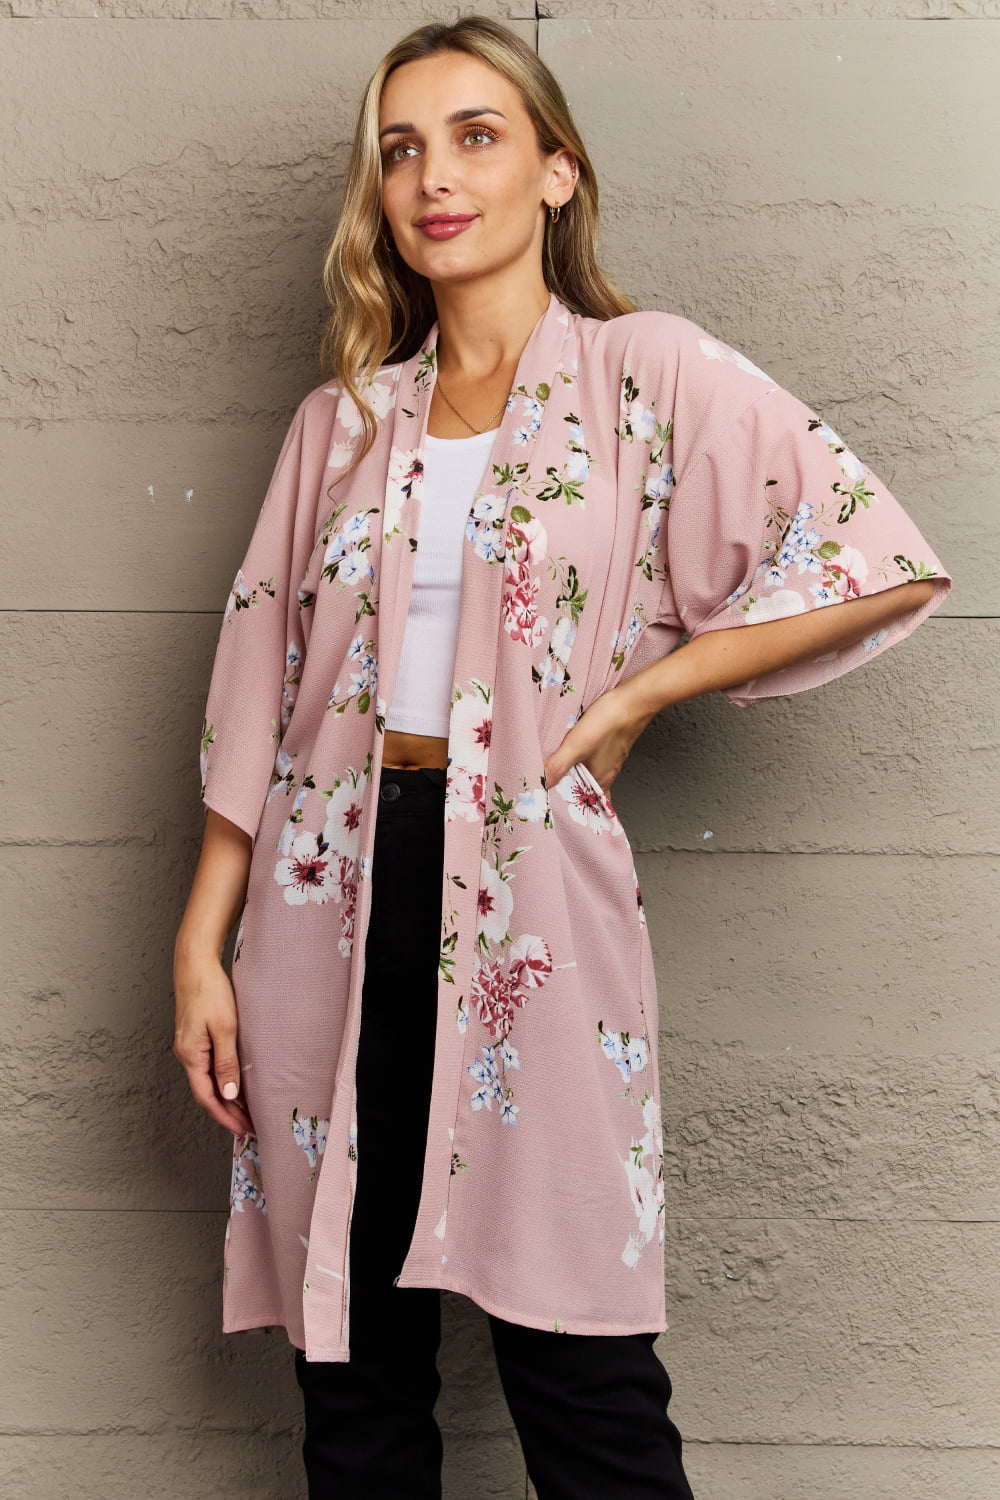 Justin Taylor Aurora Rose Floral Kimono - pvmark